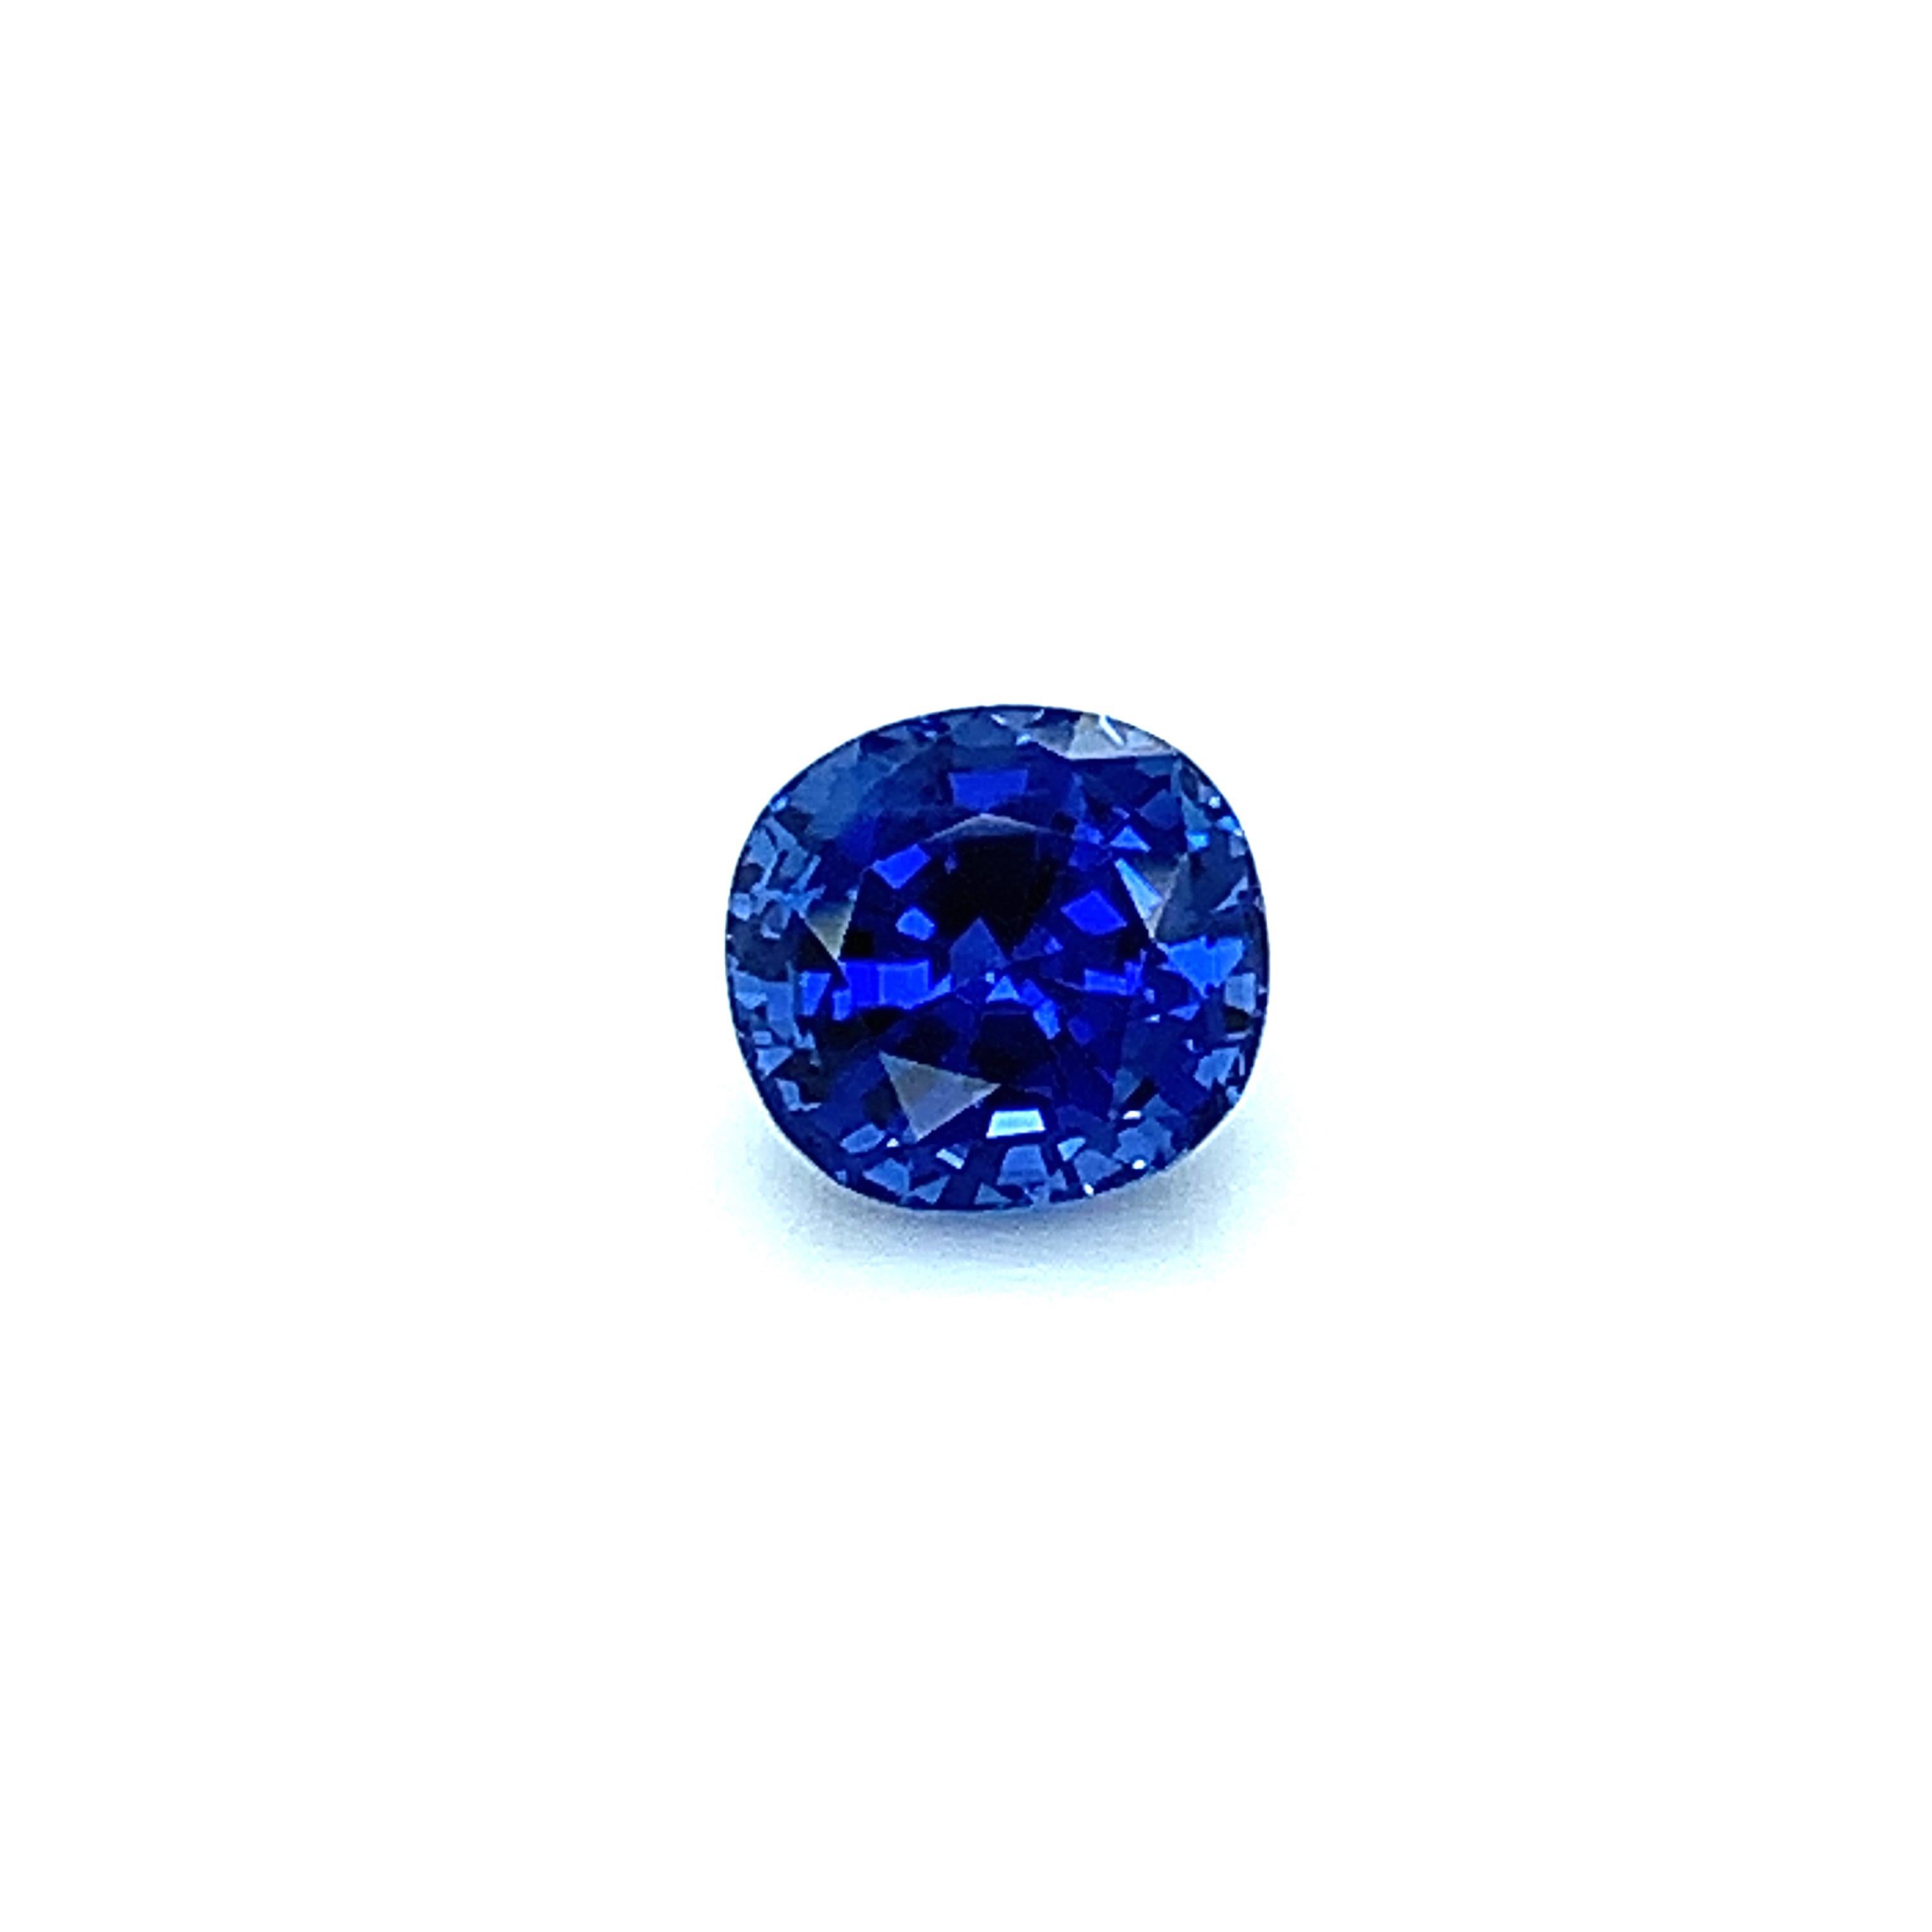 Artisan Unheated 3.32 Carat Ceylon Blue Sapphire, Unset Loose Gemstone, GIA Certified